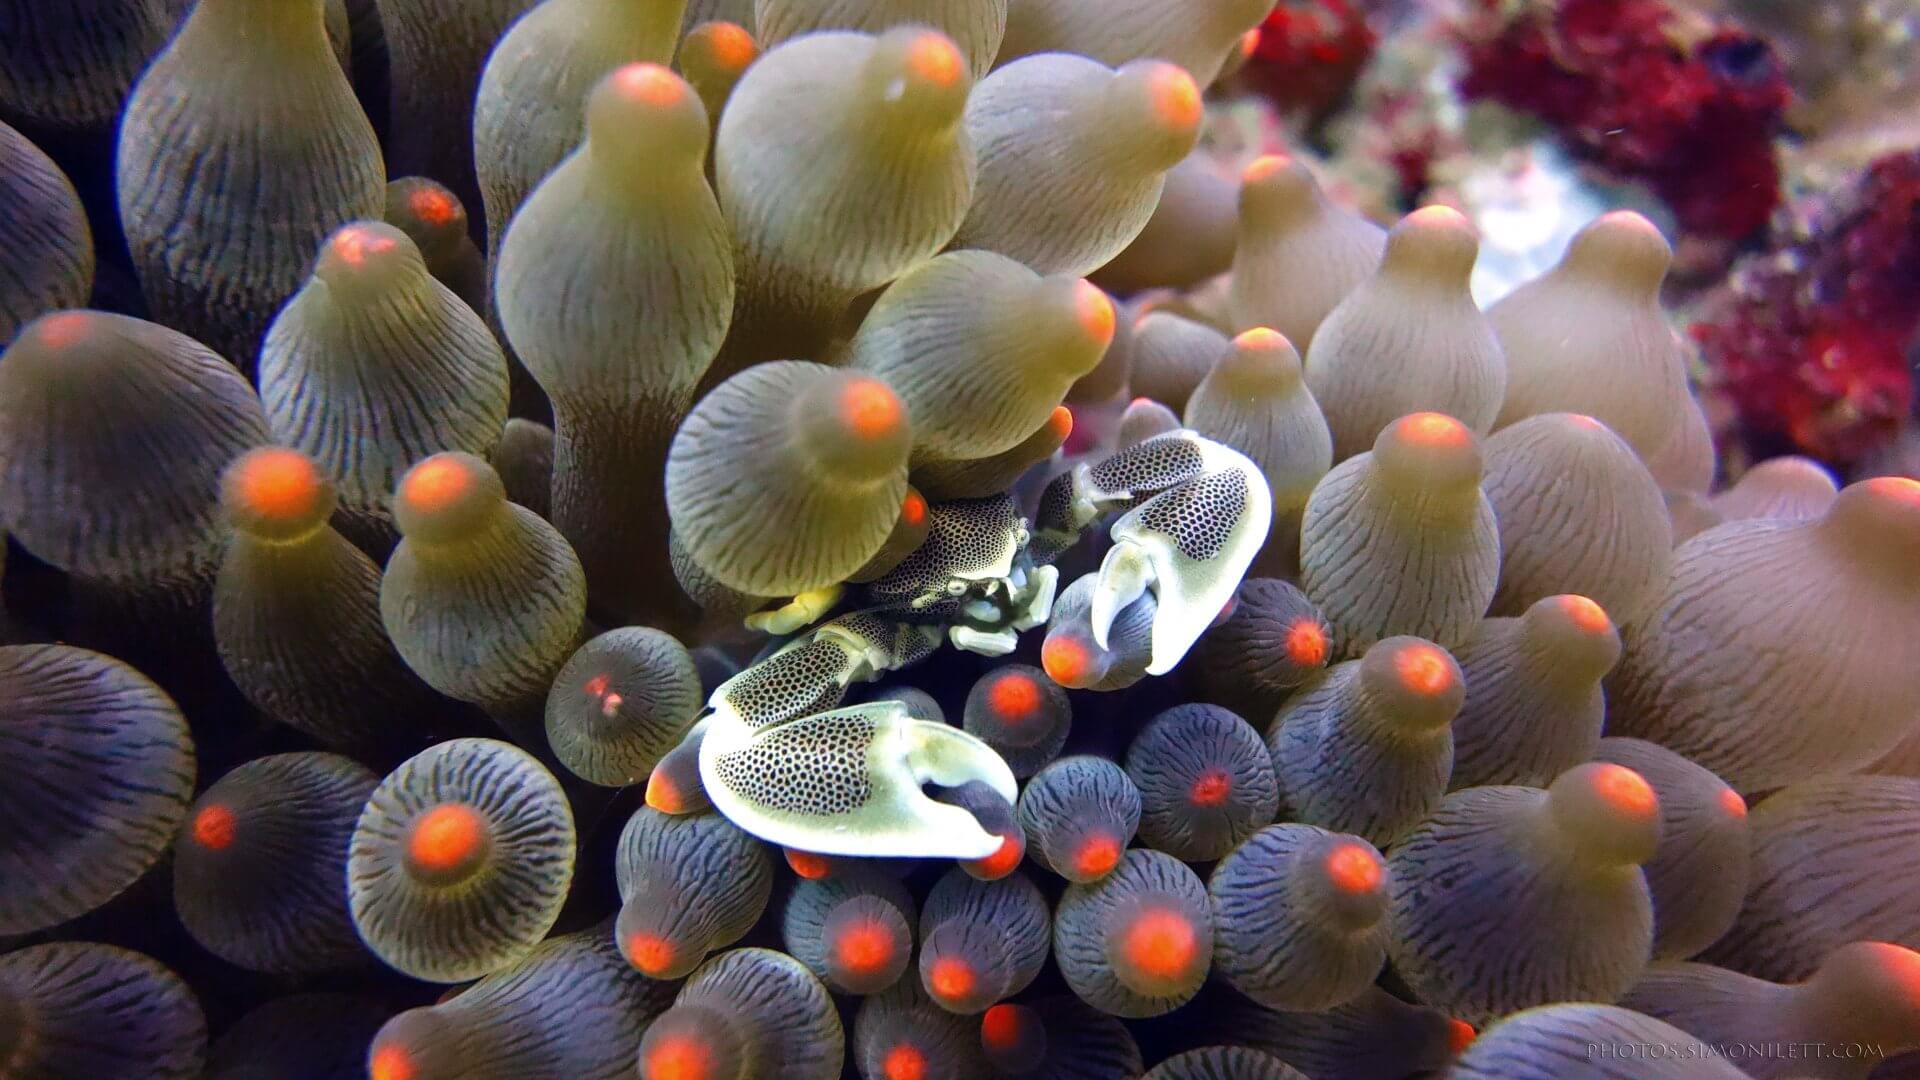 Anemone Crab Hiding In Bubble Corals